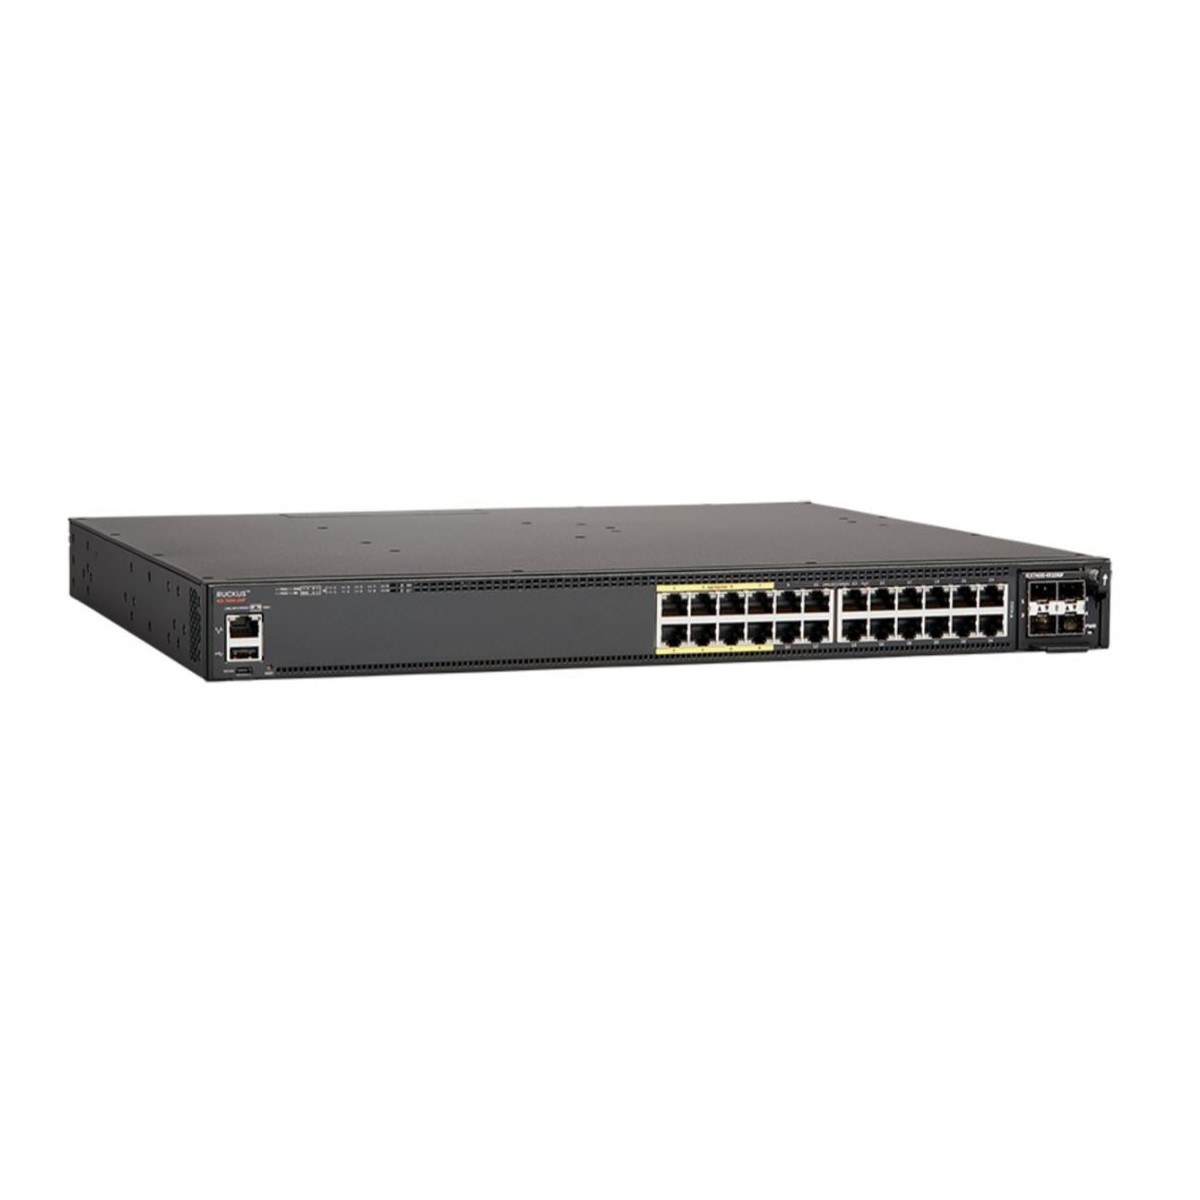 Brocade ICX7450-24P-40G-E - Switch - Amount of ports: